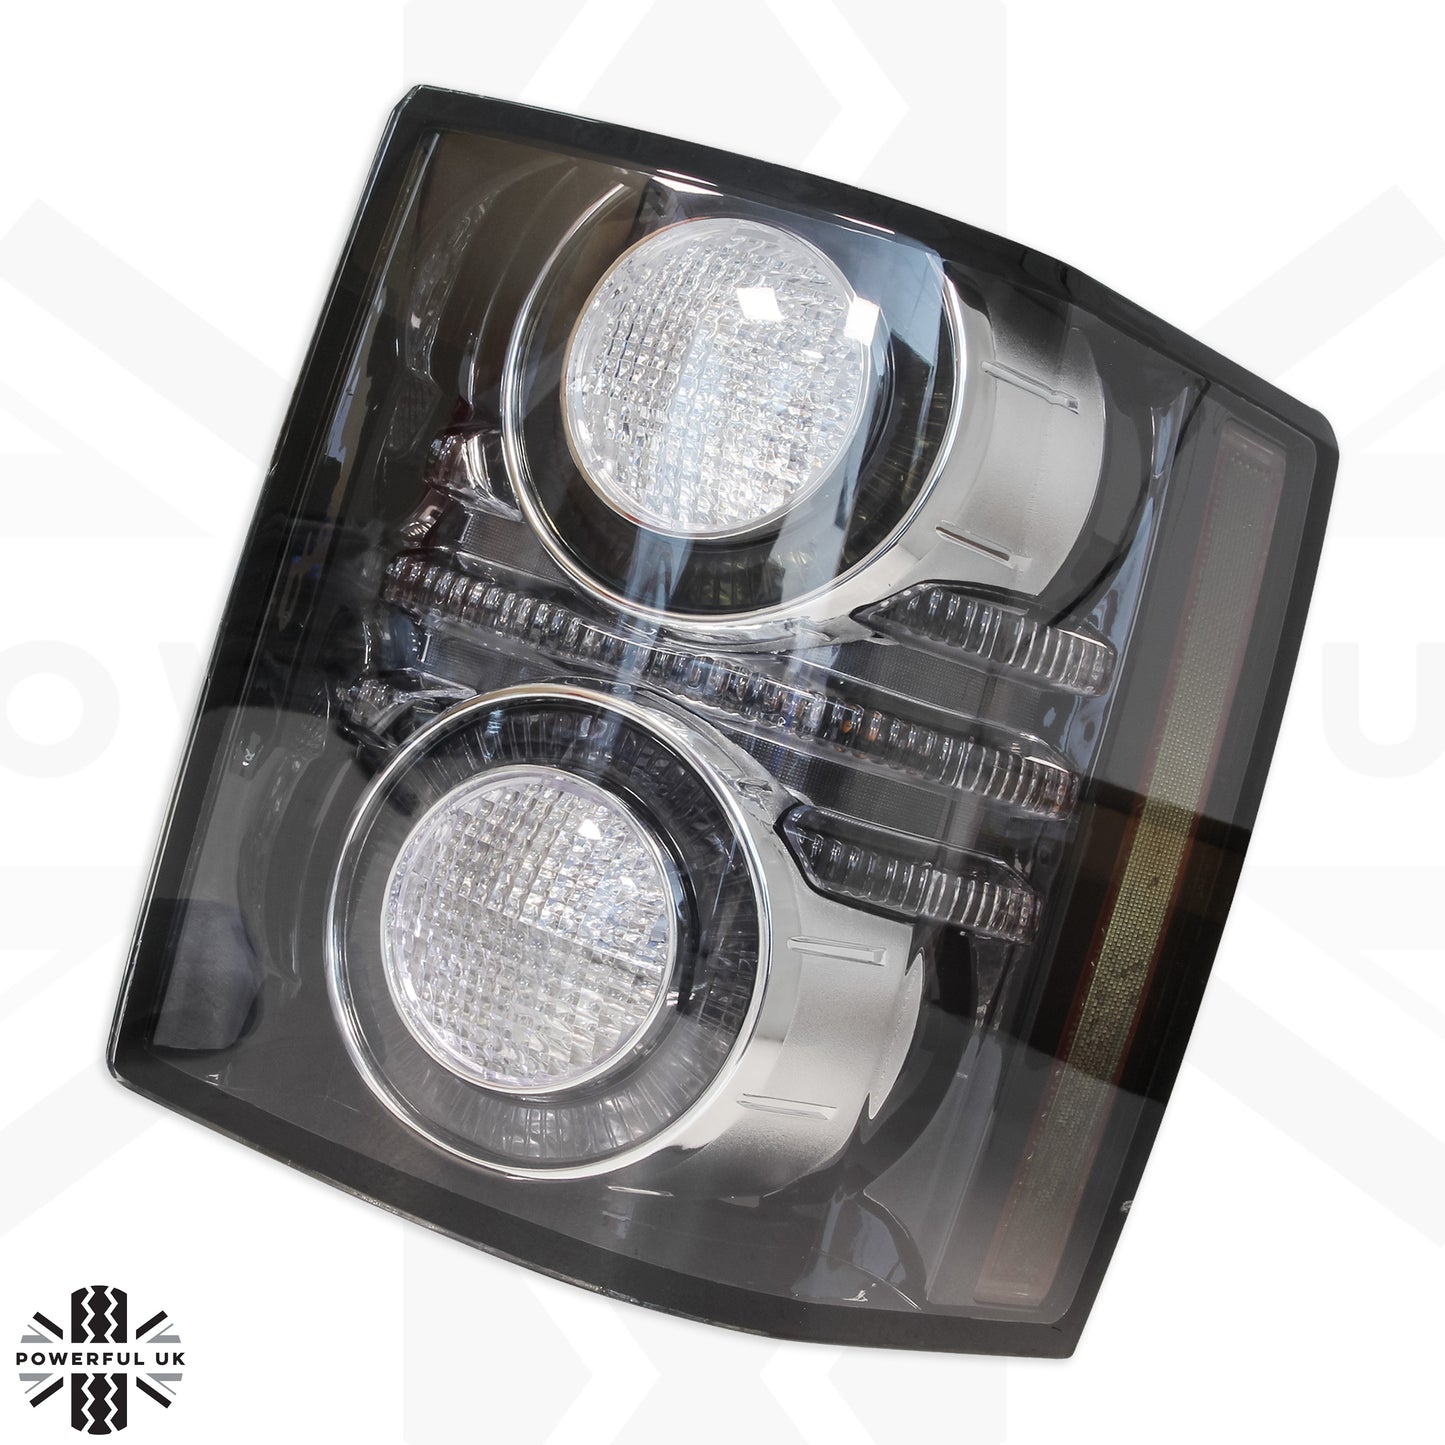 "Black Edition" LED Aftermarket Rear Lights Lamp for Range Rover L322 Vogue 2012+  - PAIR